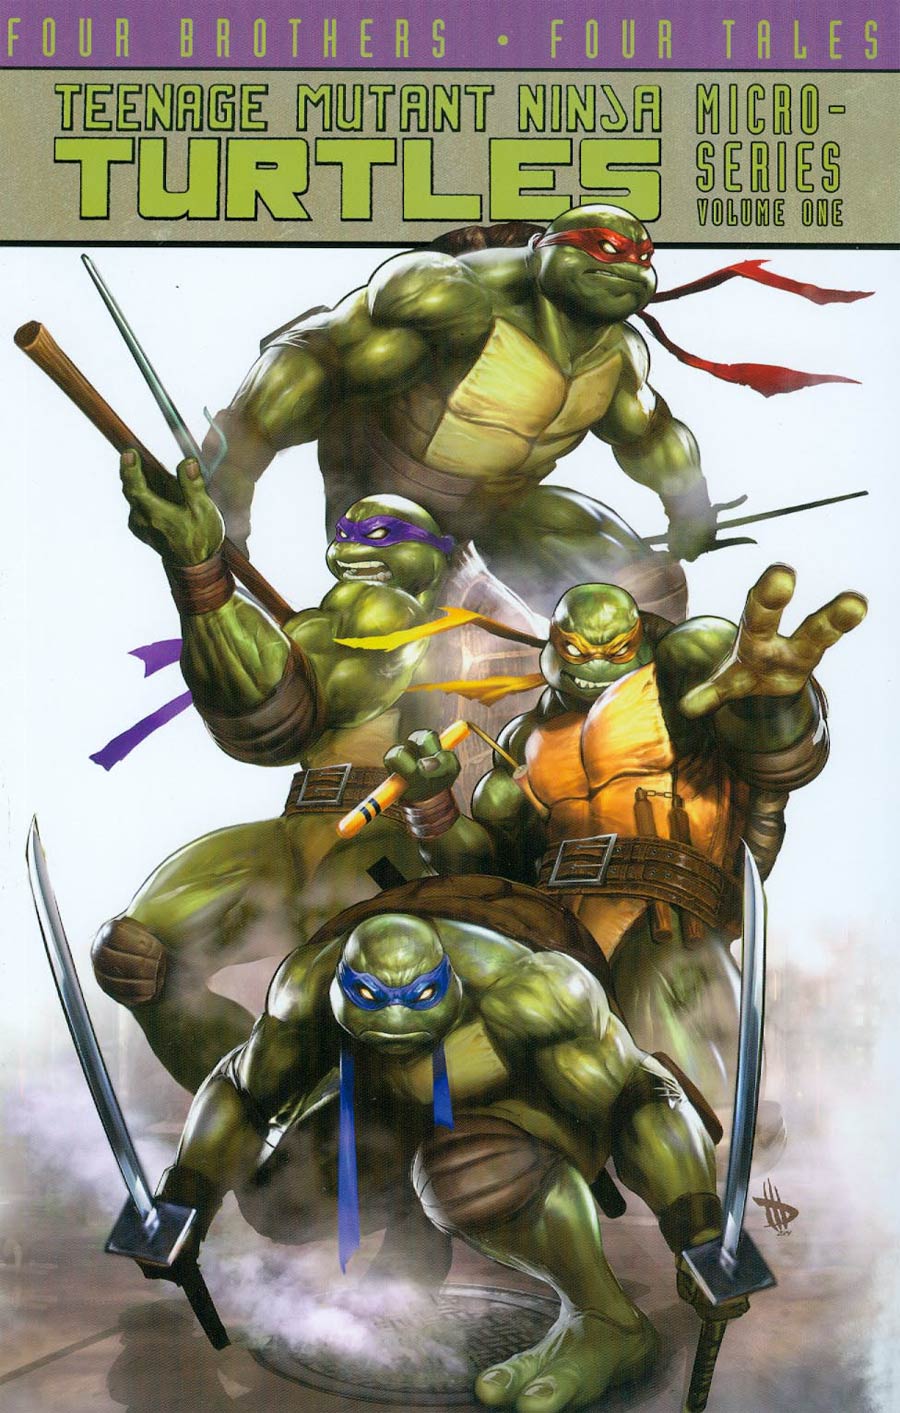 Teenage Mutant Ninja Turtles Micro-Series Vol 1 TP New Printing